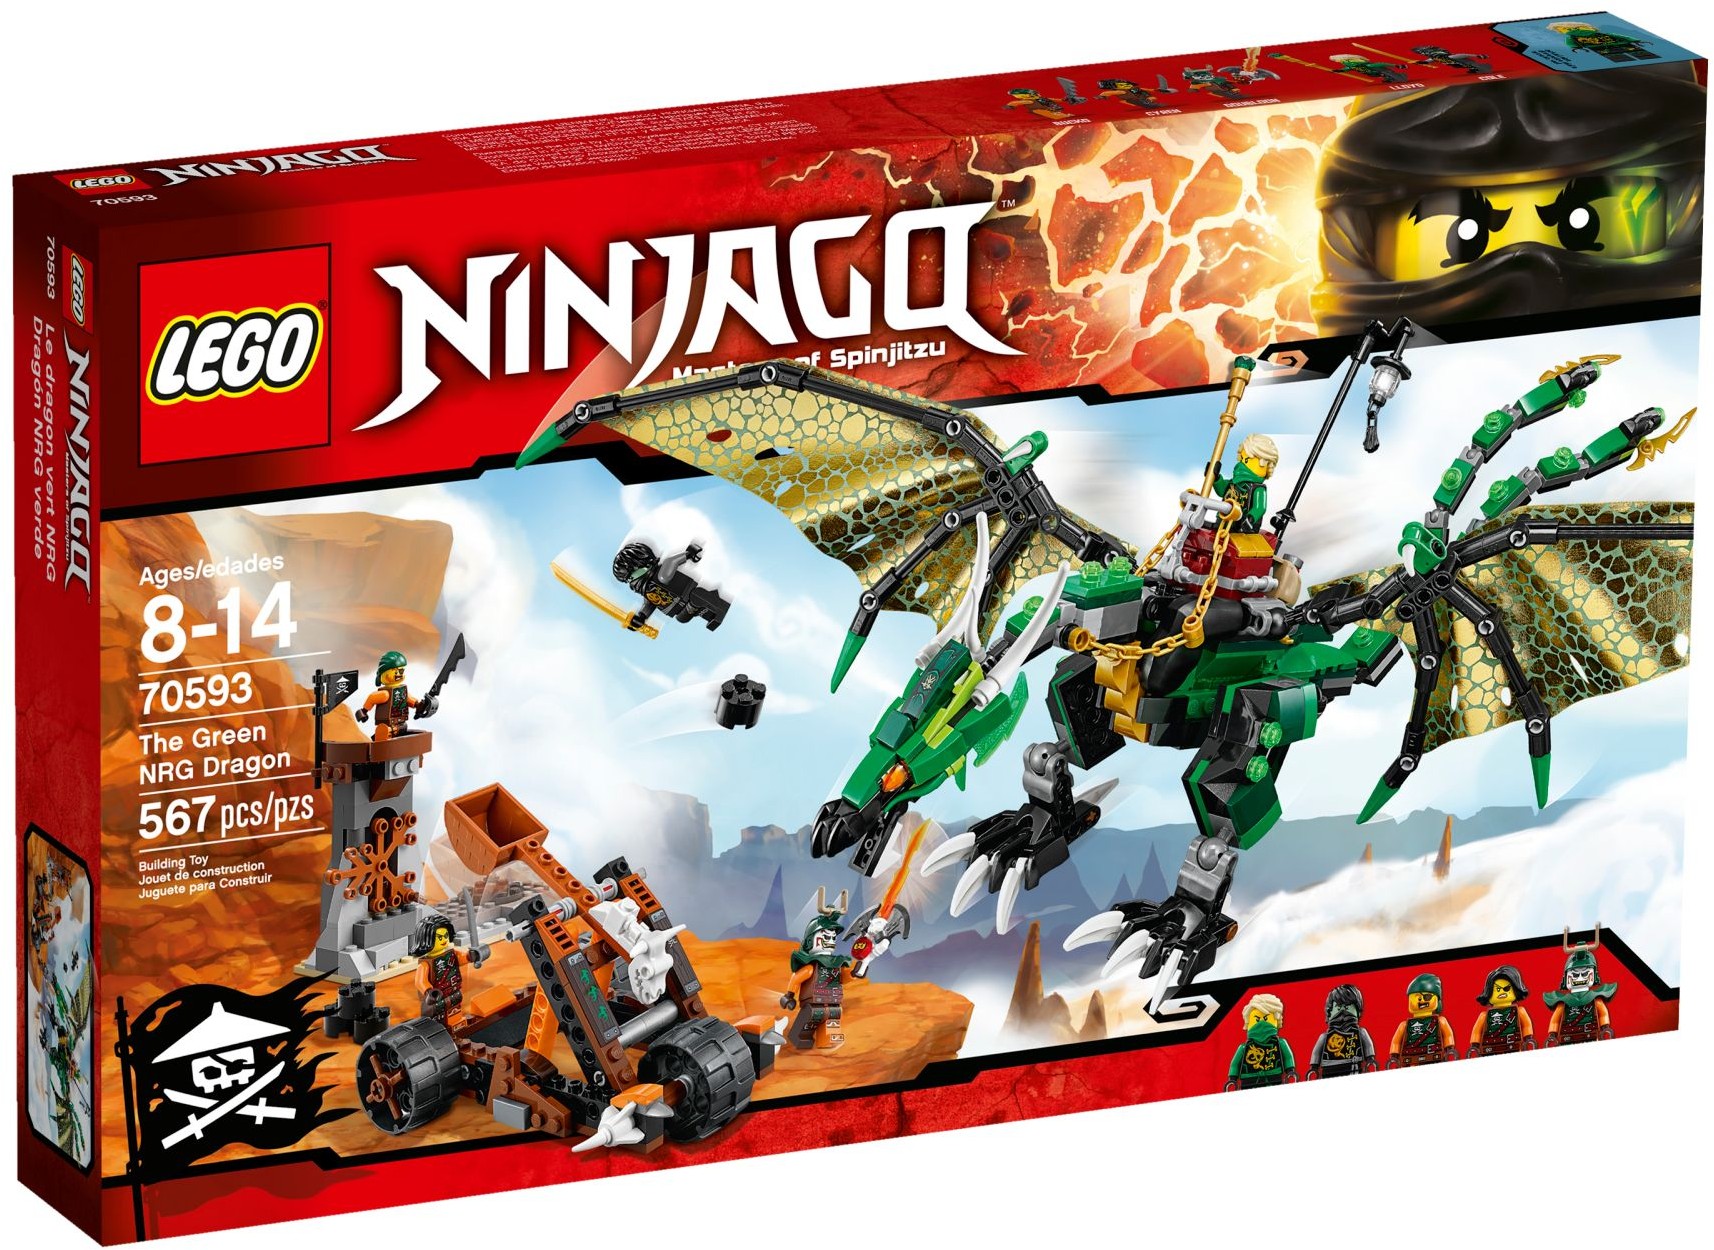 Lego 70593 The Green NRG Dragon - Lego Ninjago set for sale best price